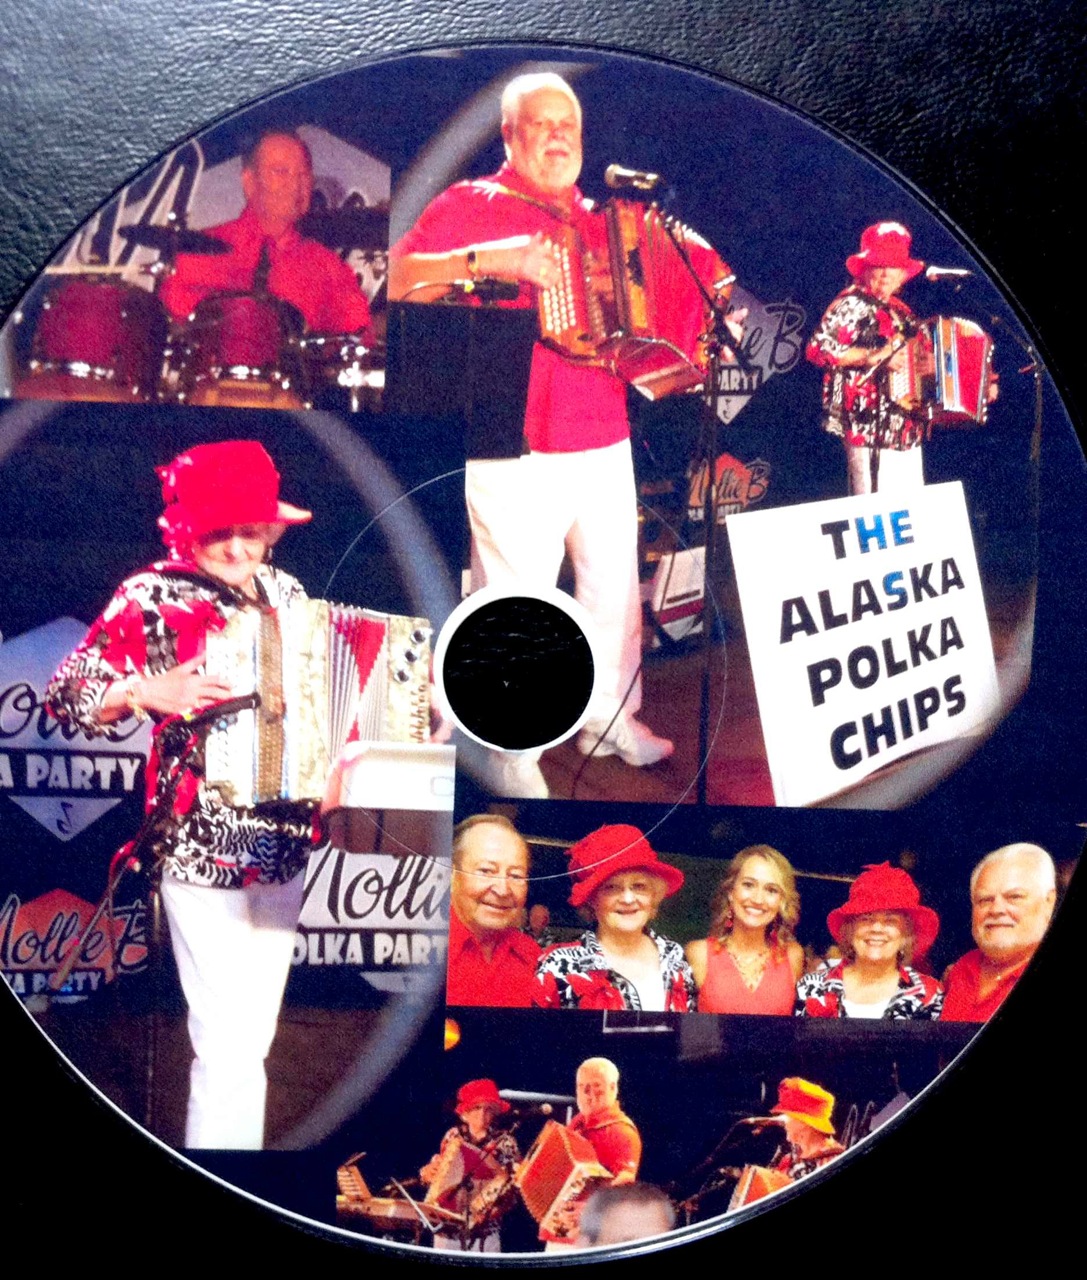 Alaska Polka Chips Molly B polka show DVD